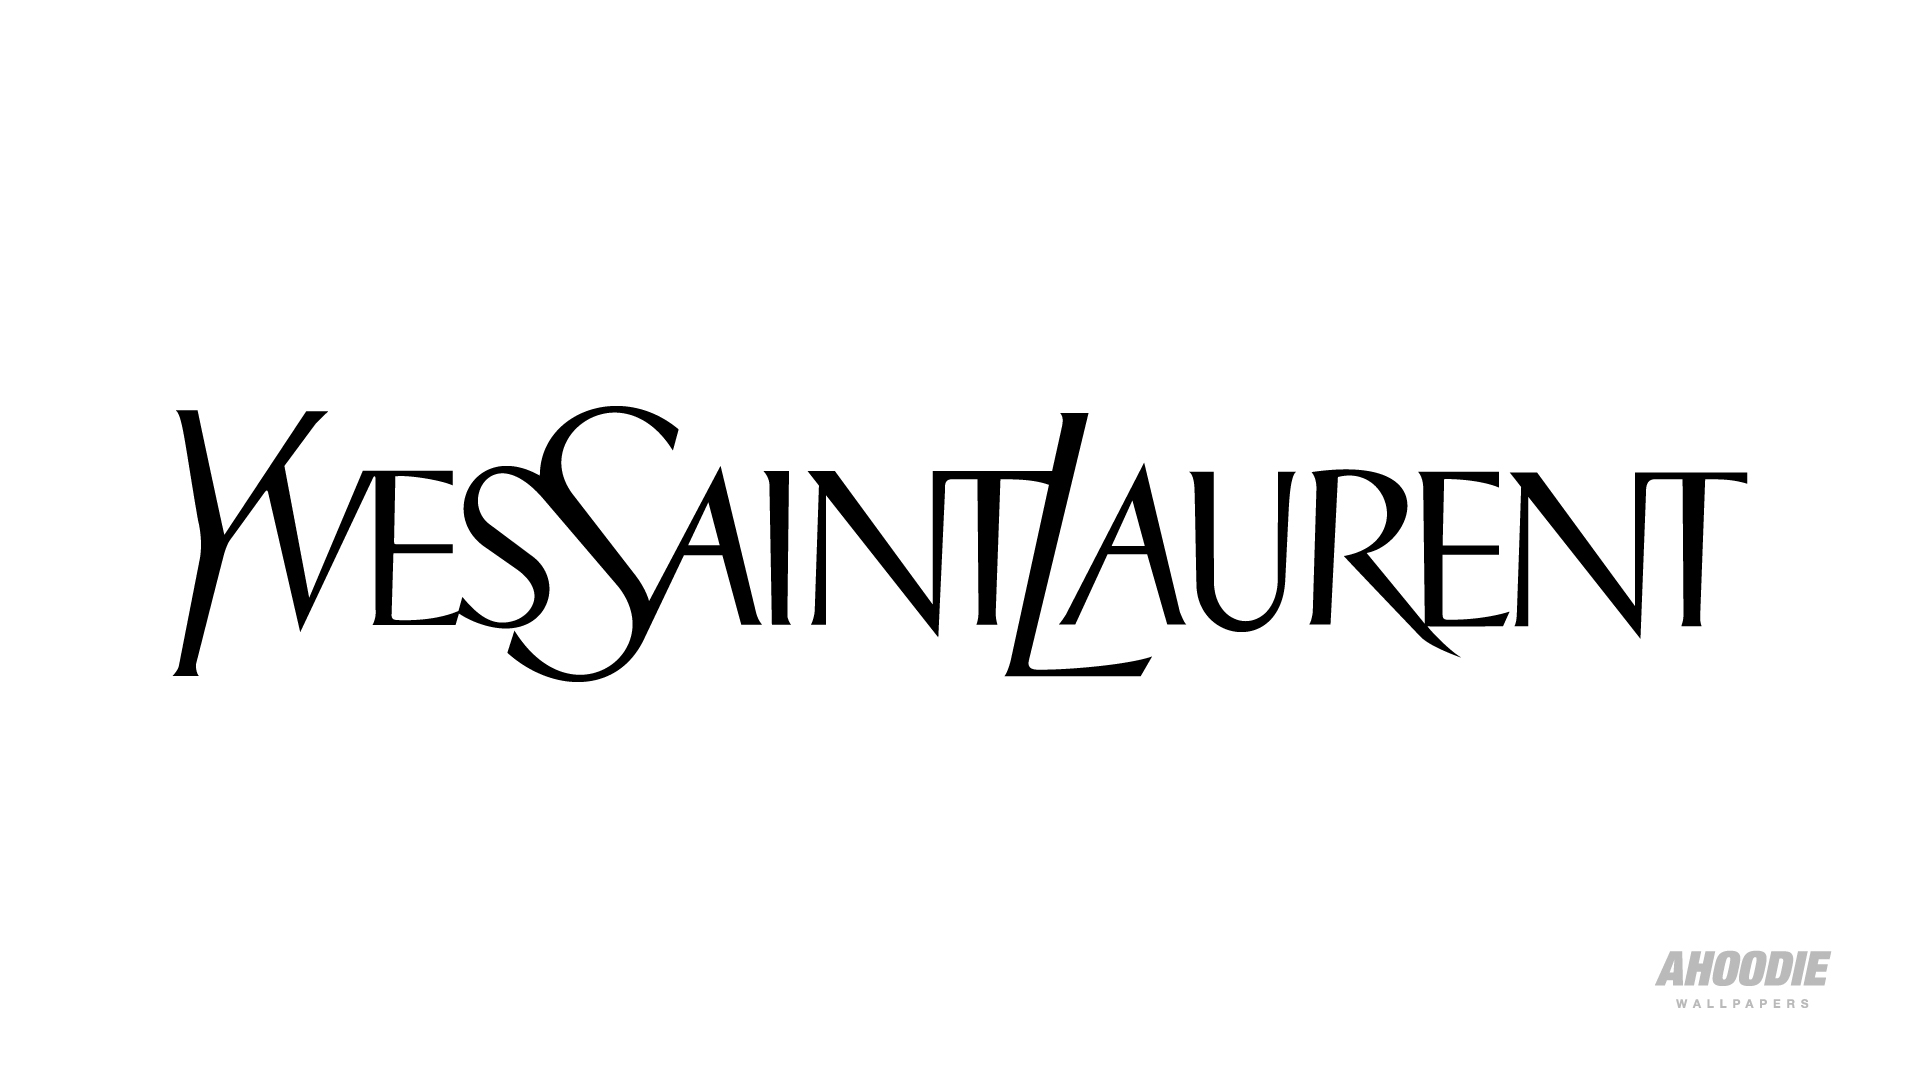 Ив сен лоран бренд. Ивсен Лоран бренд. Ив сен Лоран фирменный знак. Бренд саинт Лаурент. Логотип бренда Yves Saint Laurent.